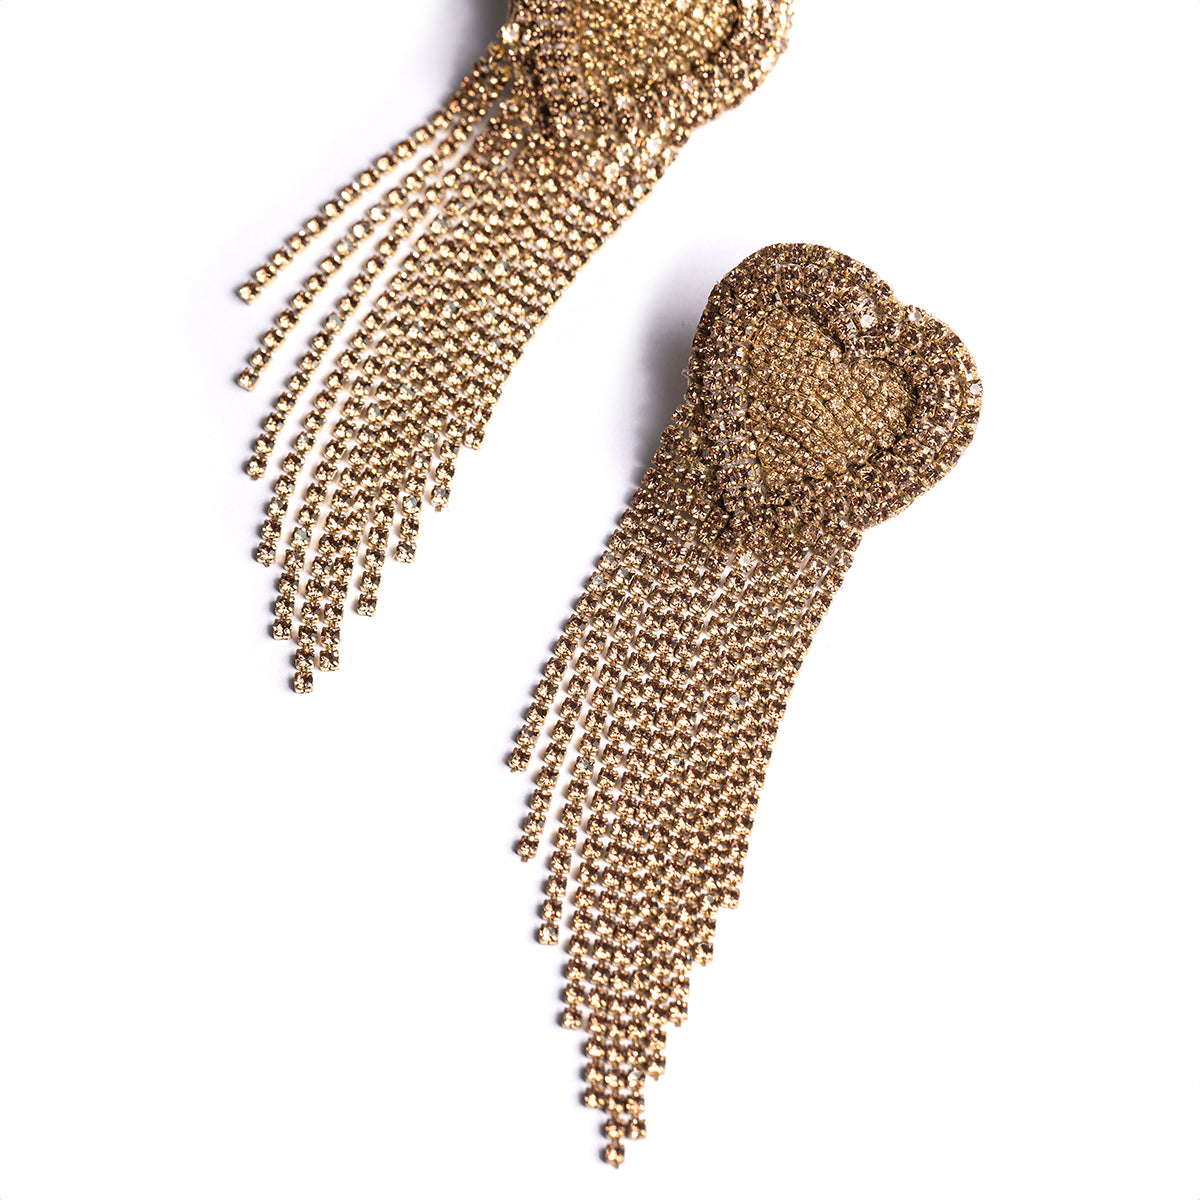 Deepa Gurnani handmade the Kaylie earrings in gold color